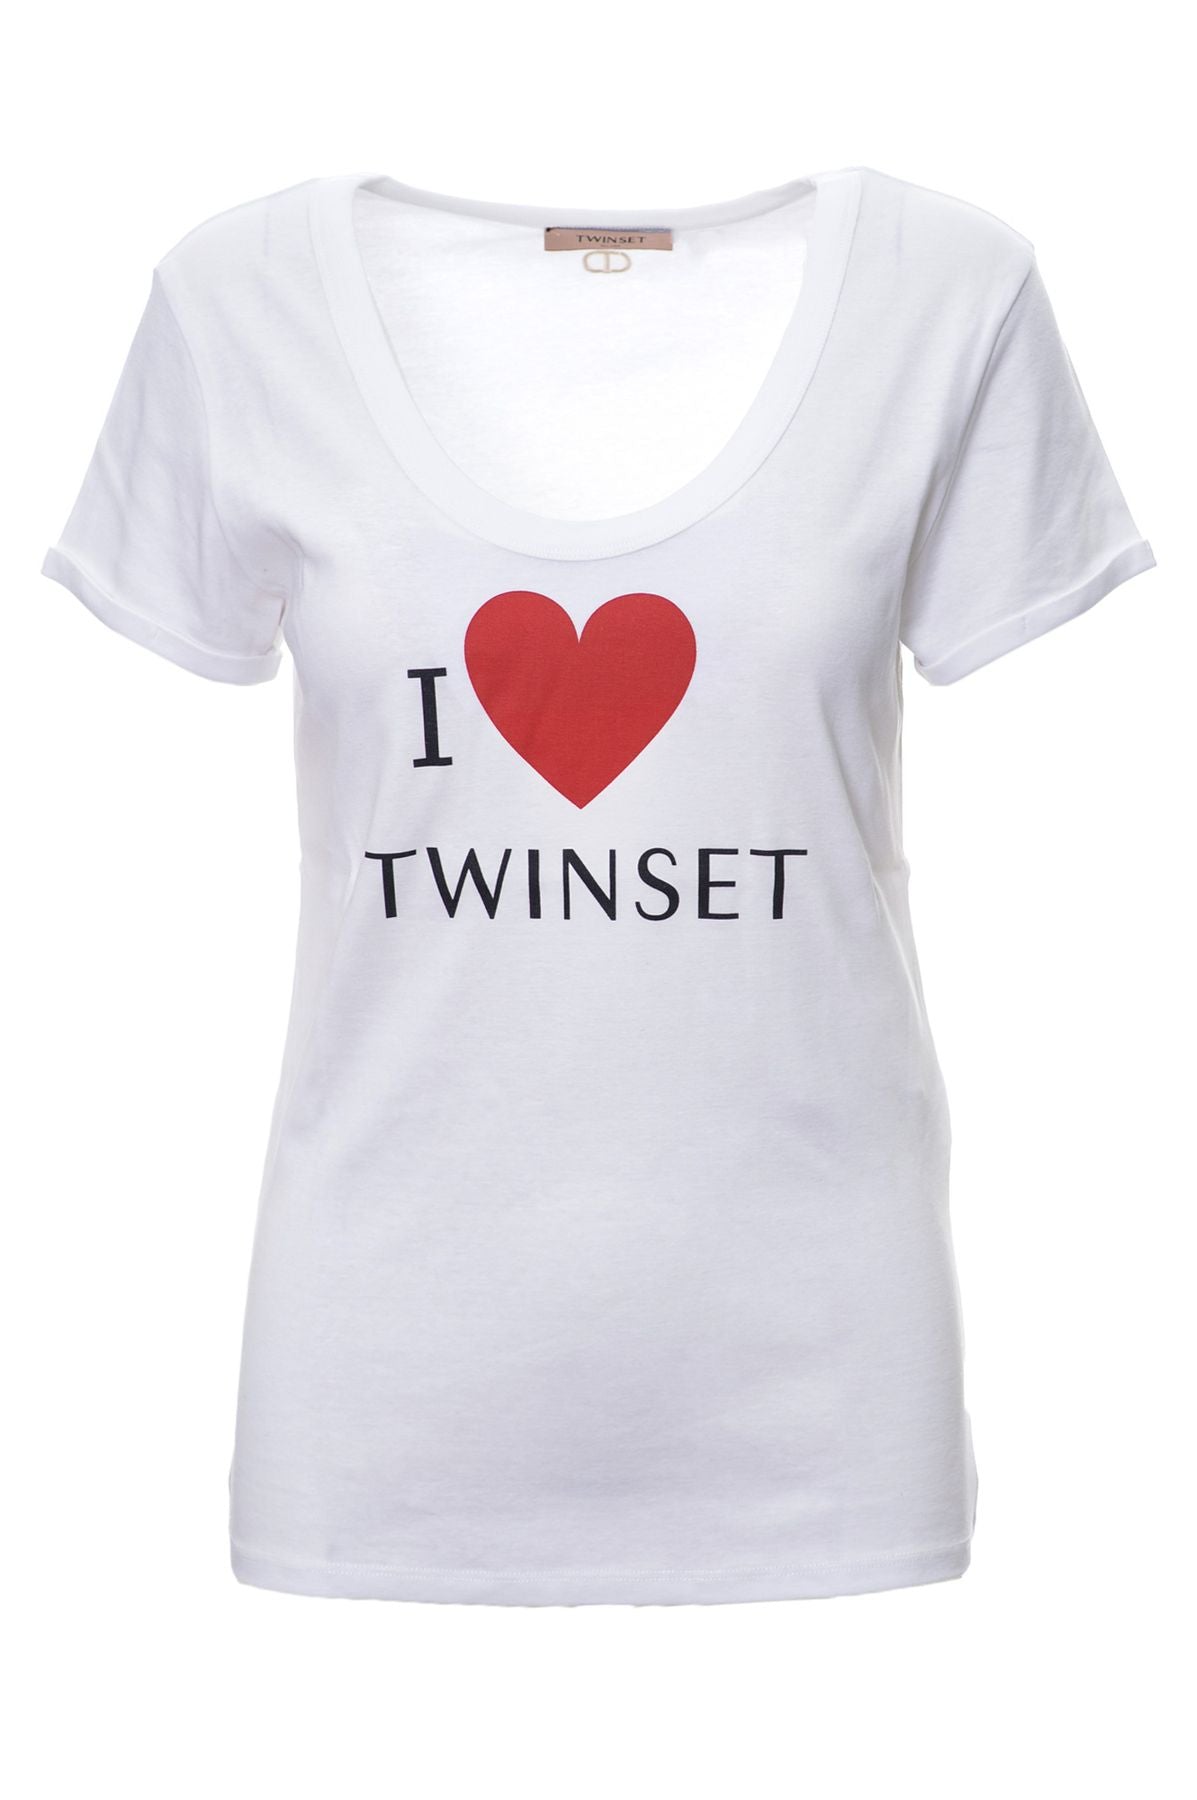 TWIN-SET Spring/Summer Cotton T-shirt